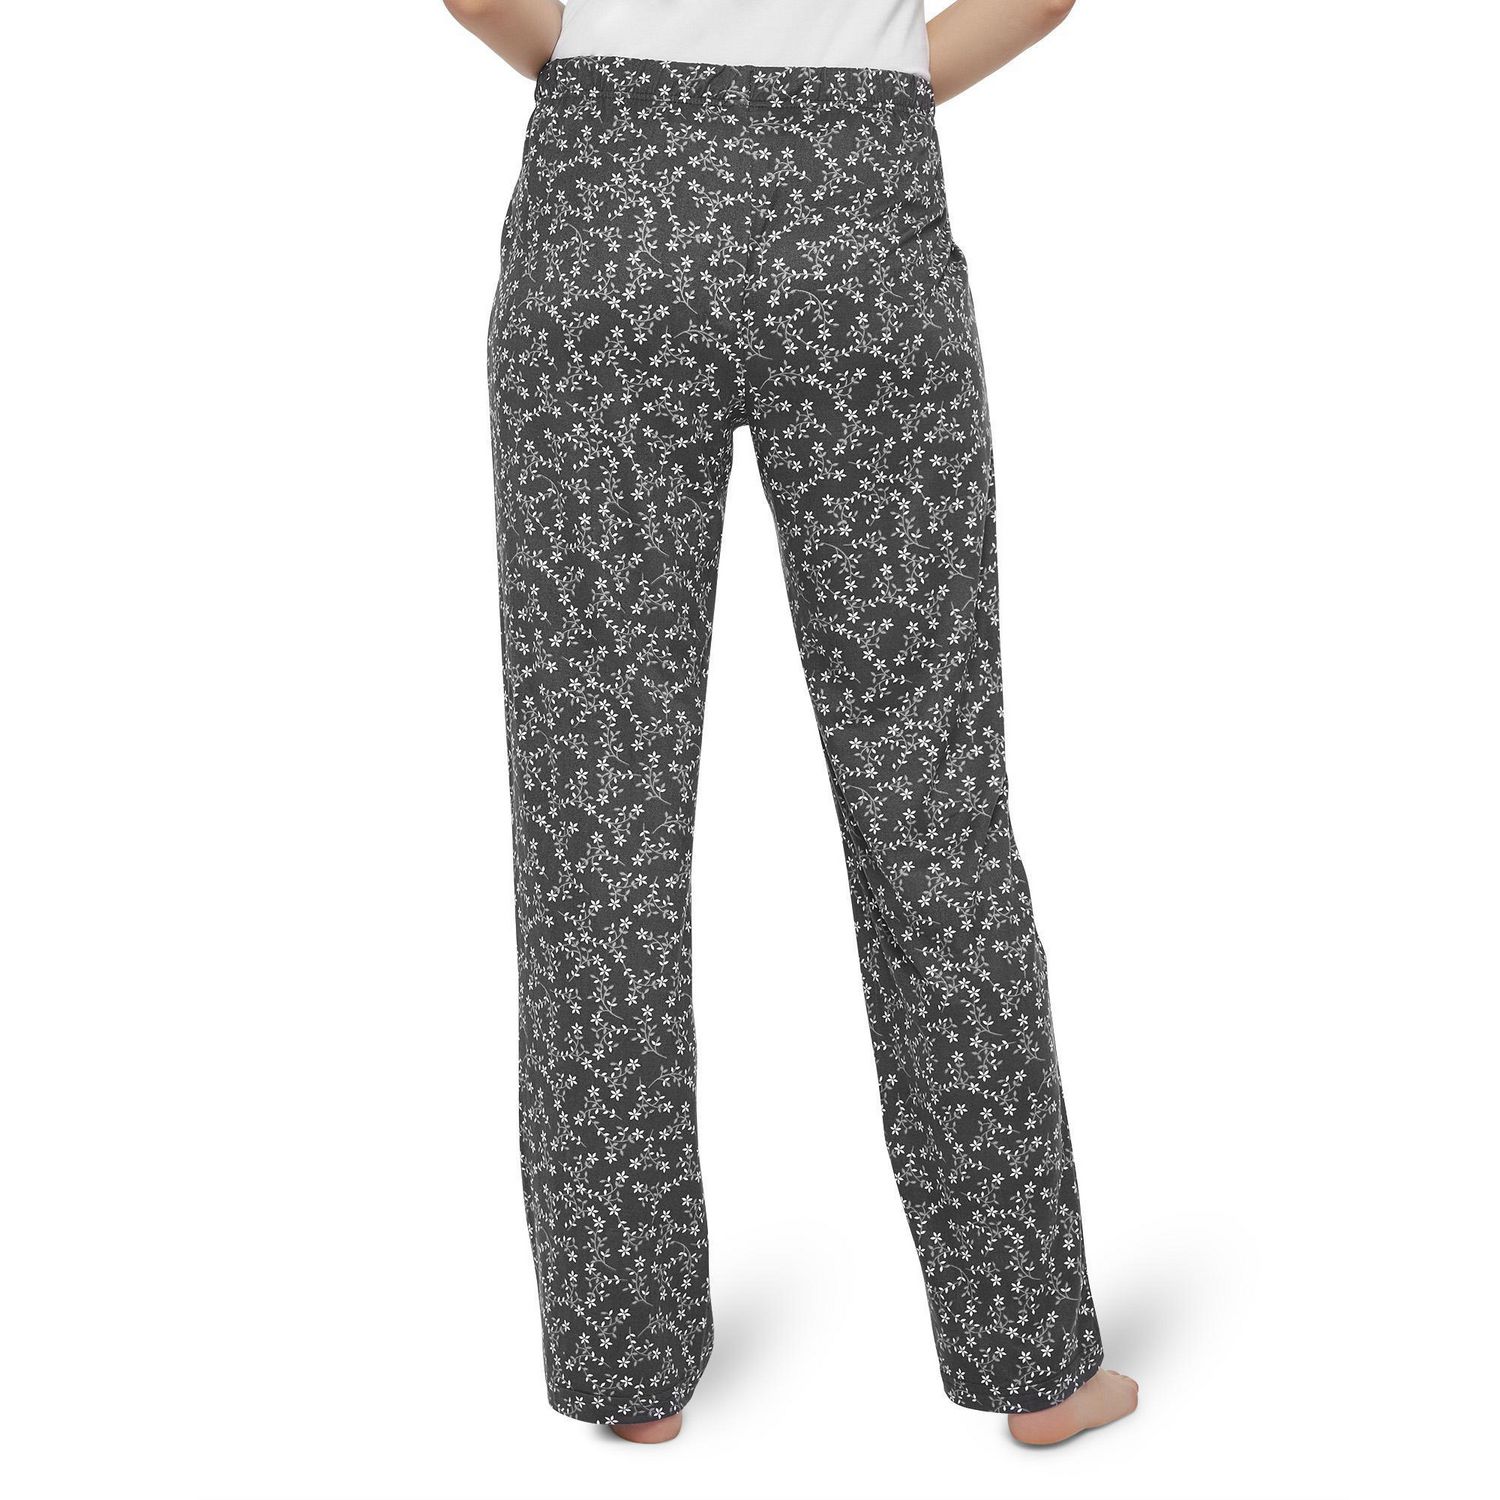 George Women's Jersey Pajama Pants 